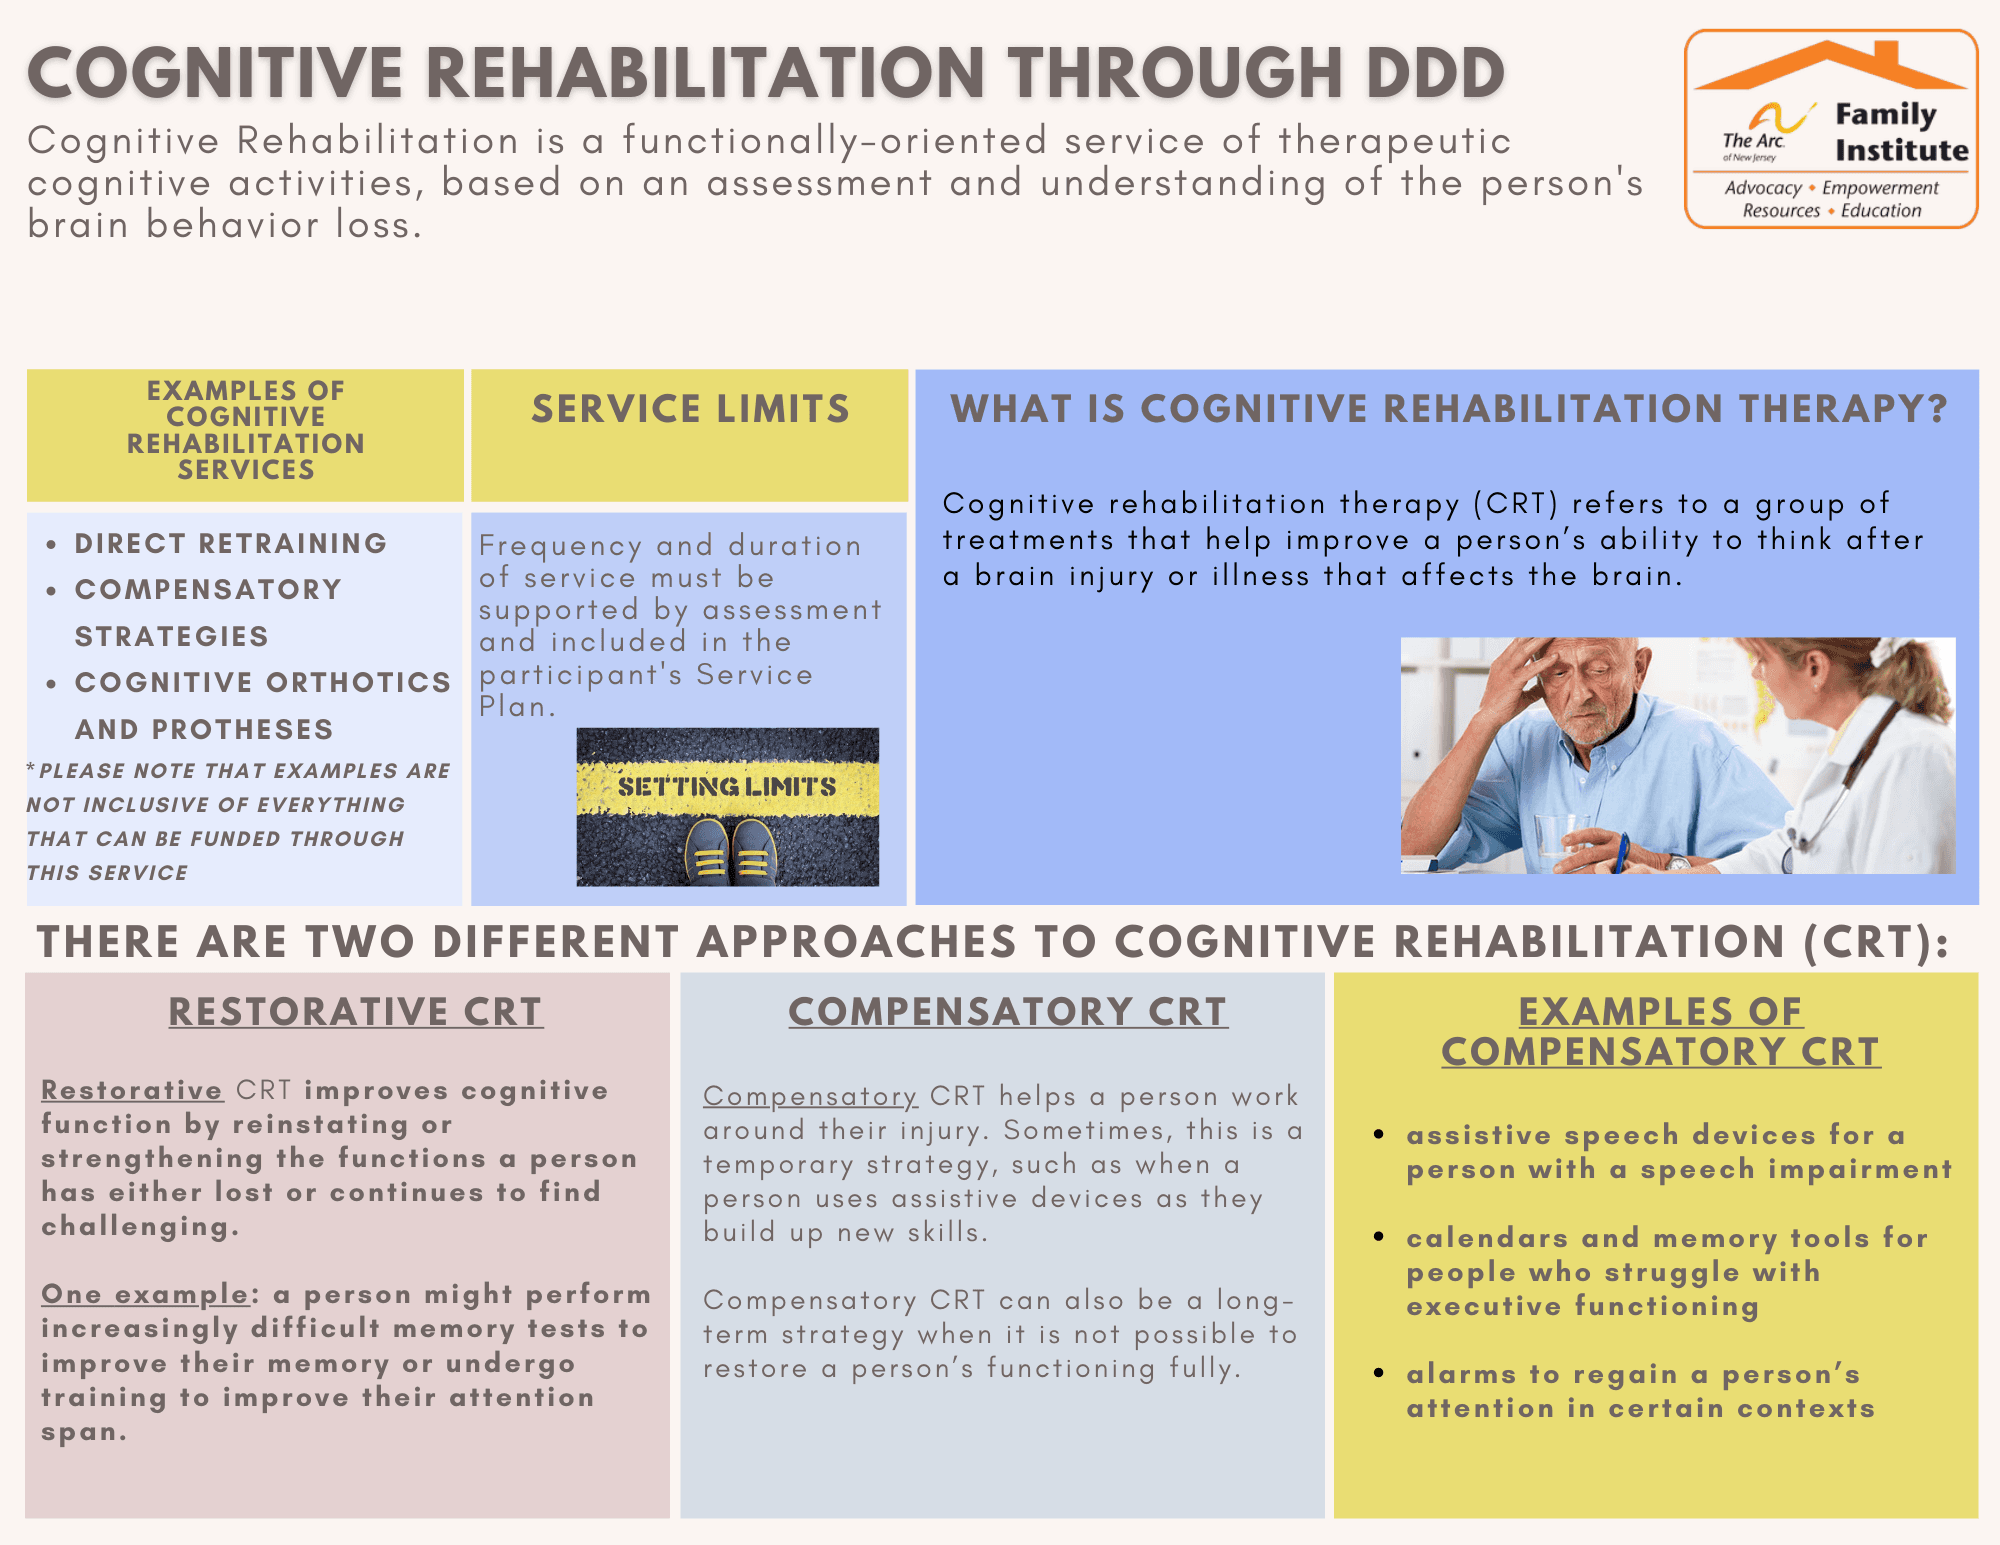 Cognitive Rehabilitation Through the Division of Developmental Disabilities (DDD) DDD